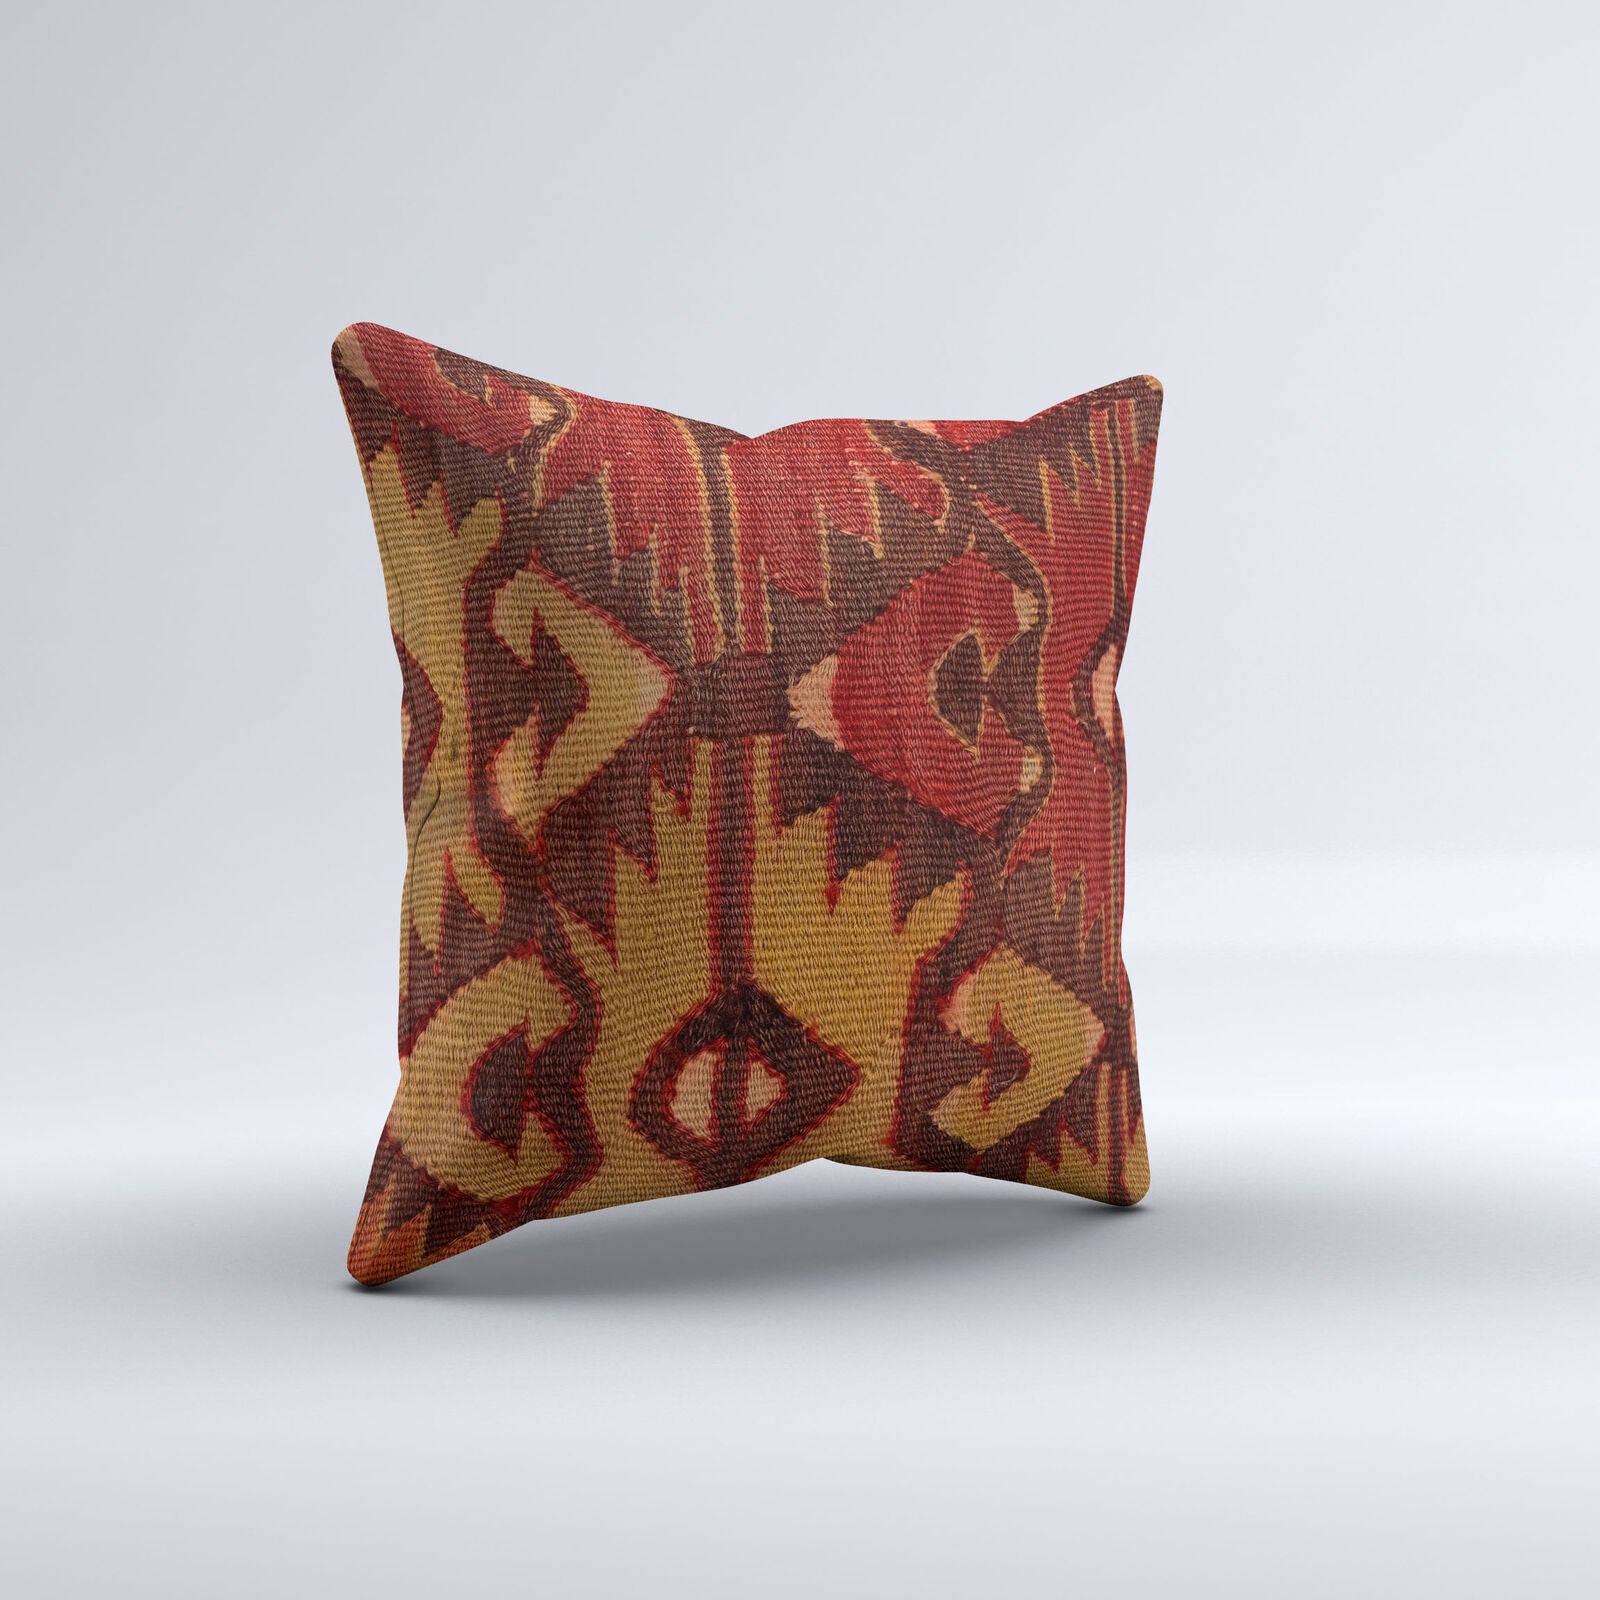 Vintage Turkish Kilim Cushion Cover 40x40 cm 16x16 in  Square Pillowcase 40979